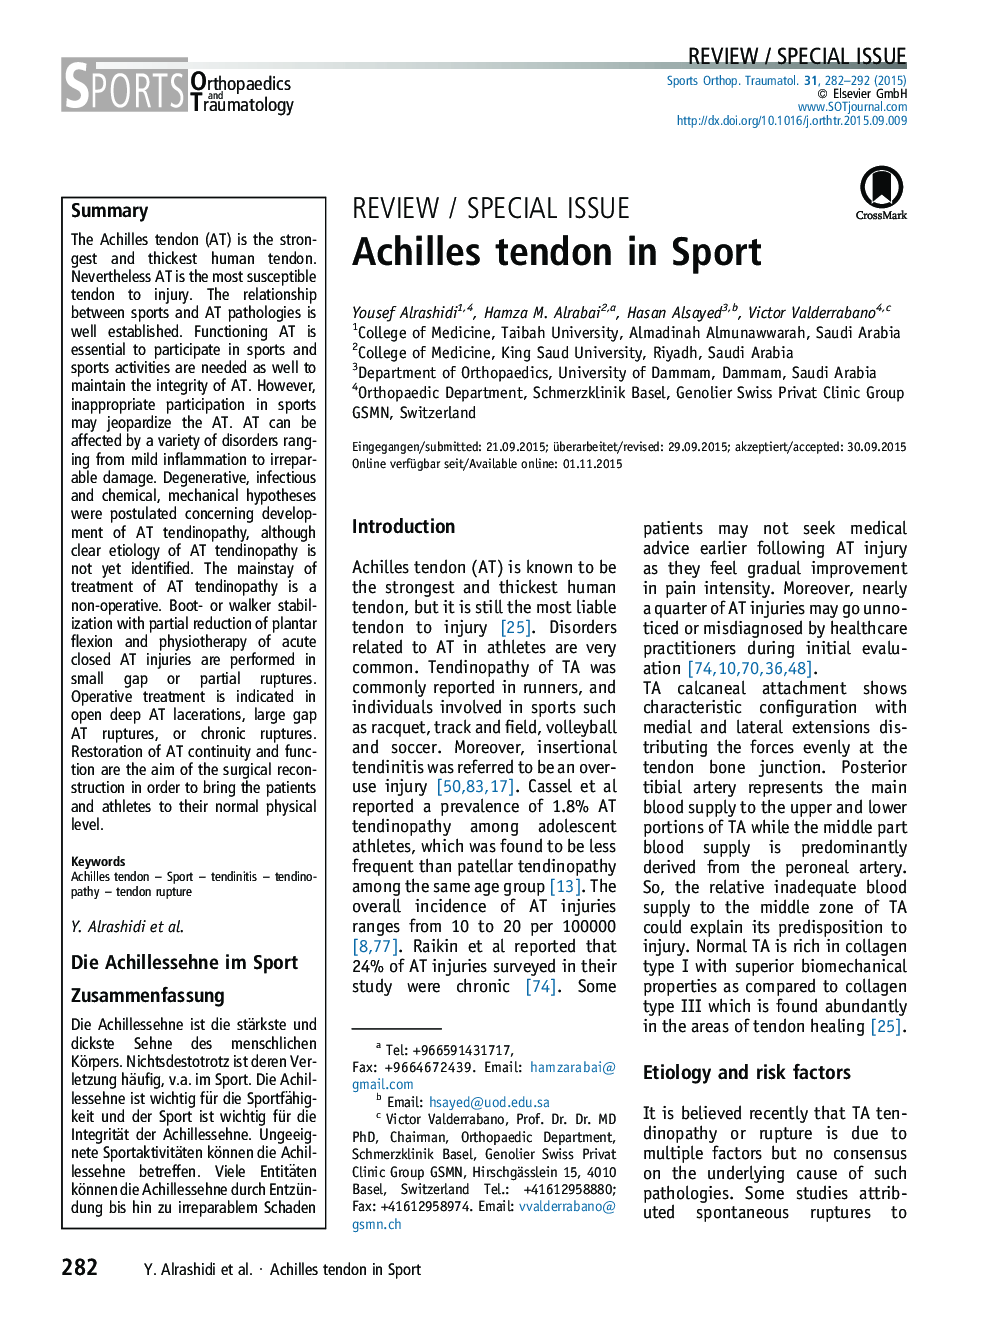 Achilles tendon in Sport